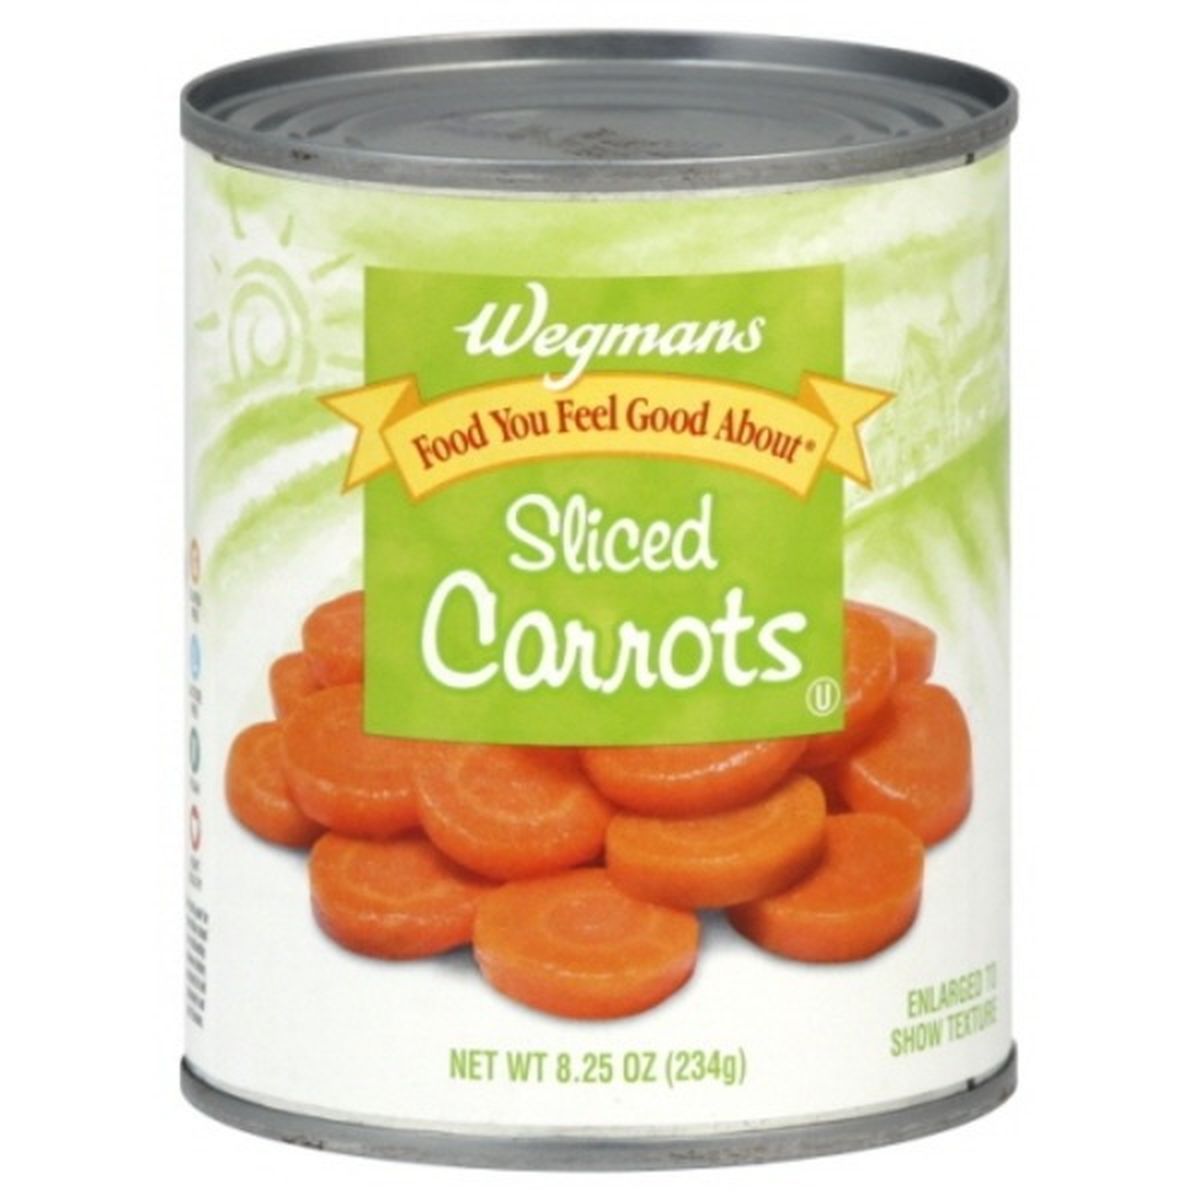 Calories in Wegmans Sliced Carrots